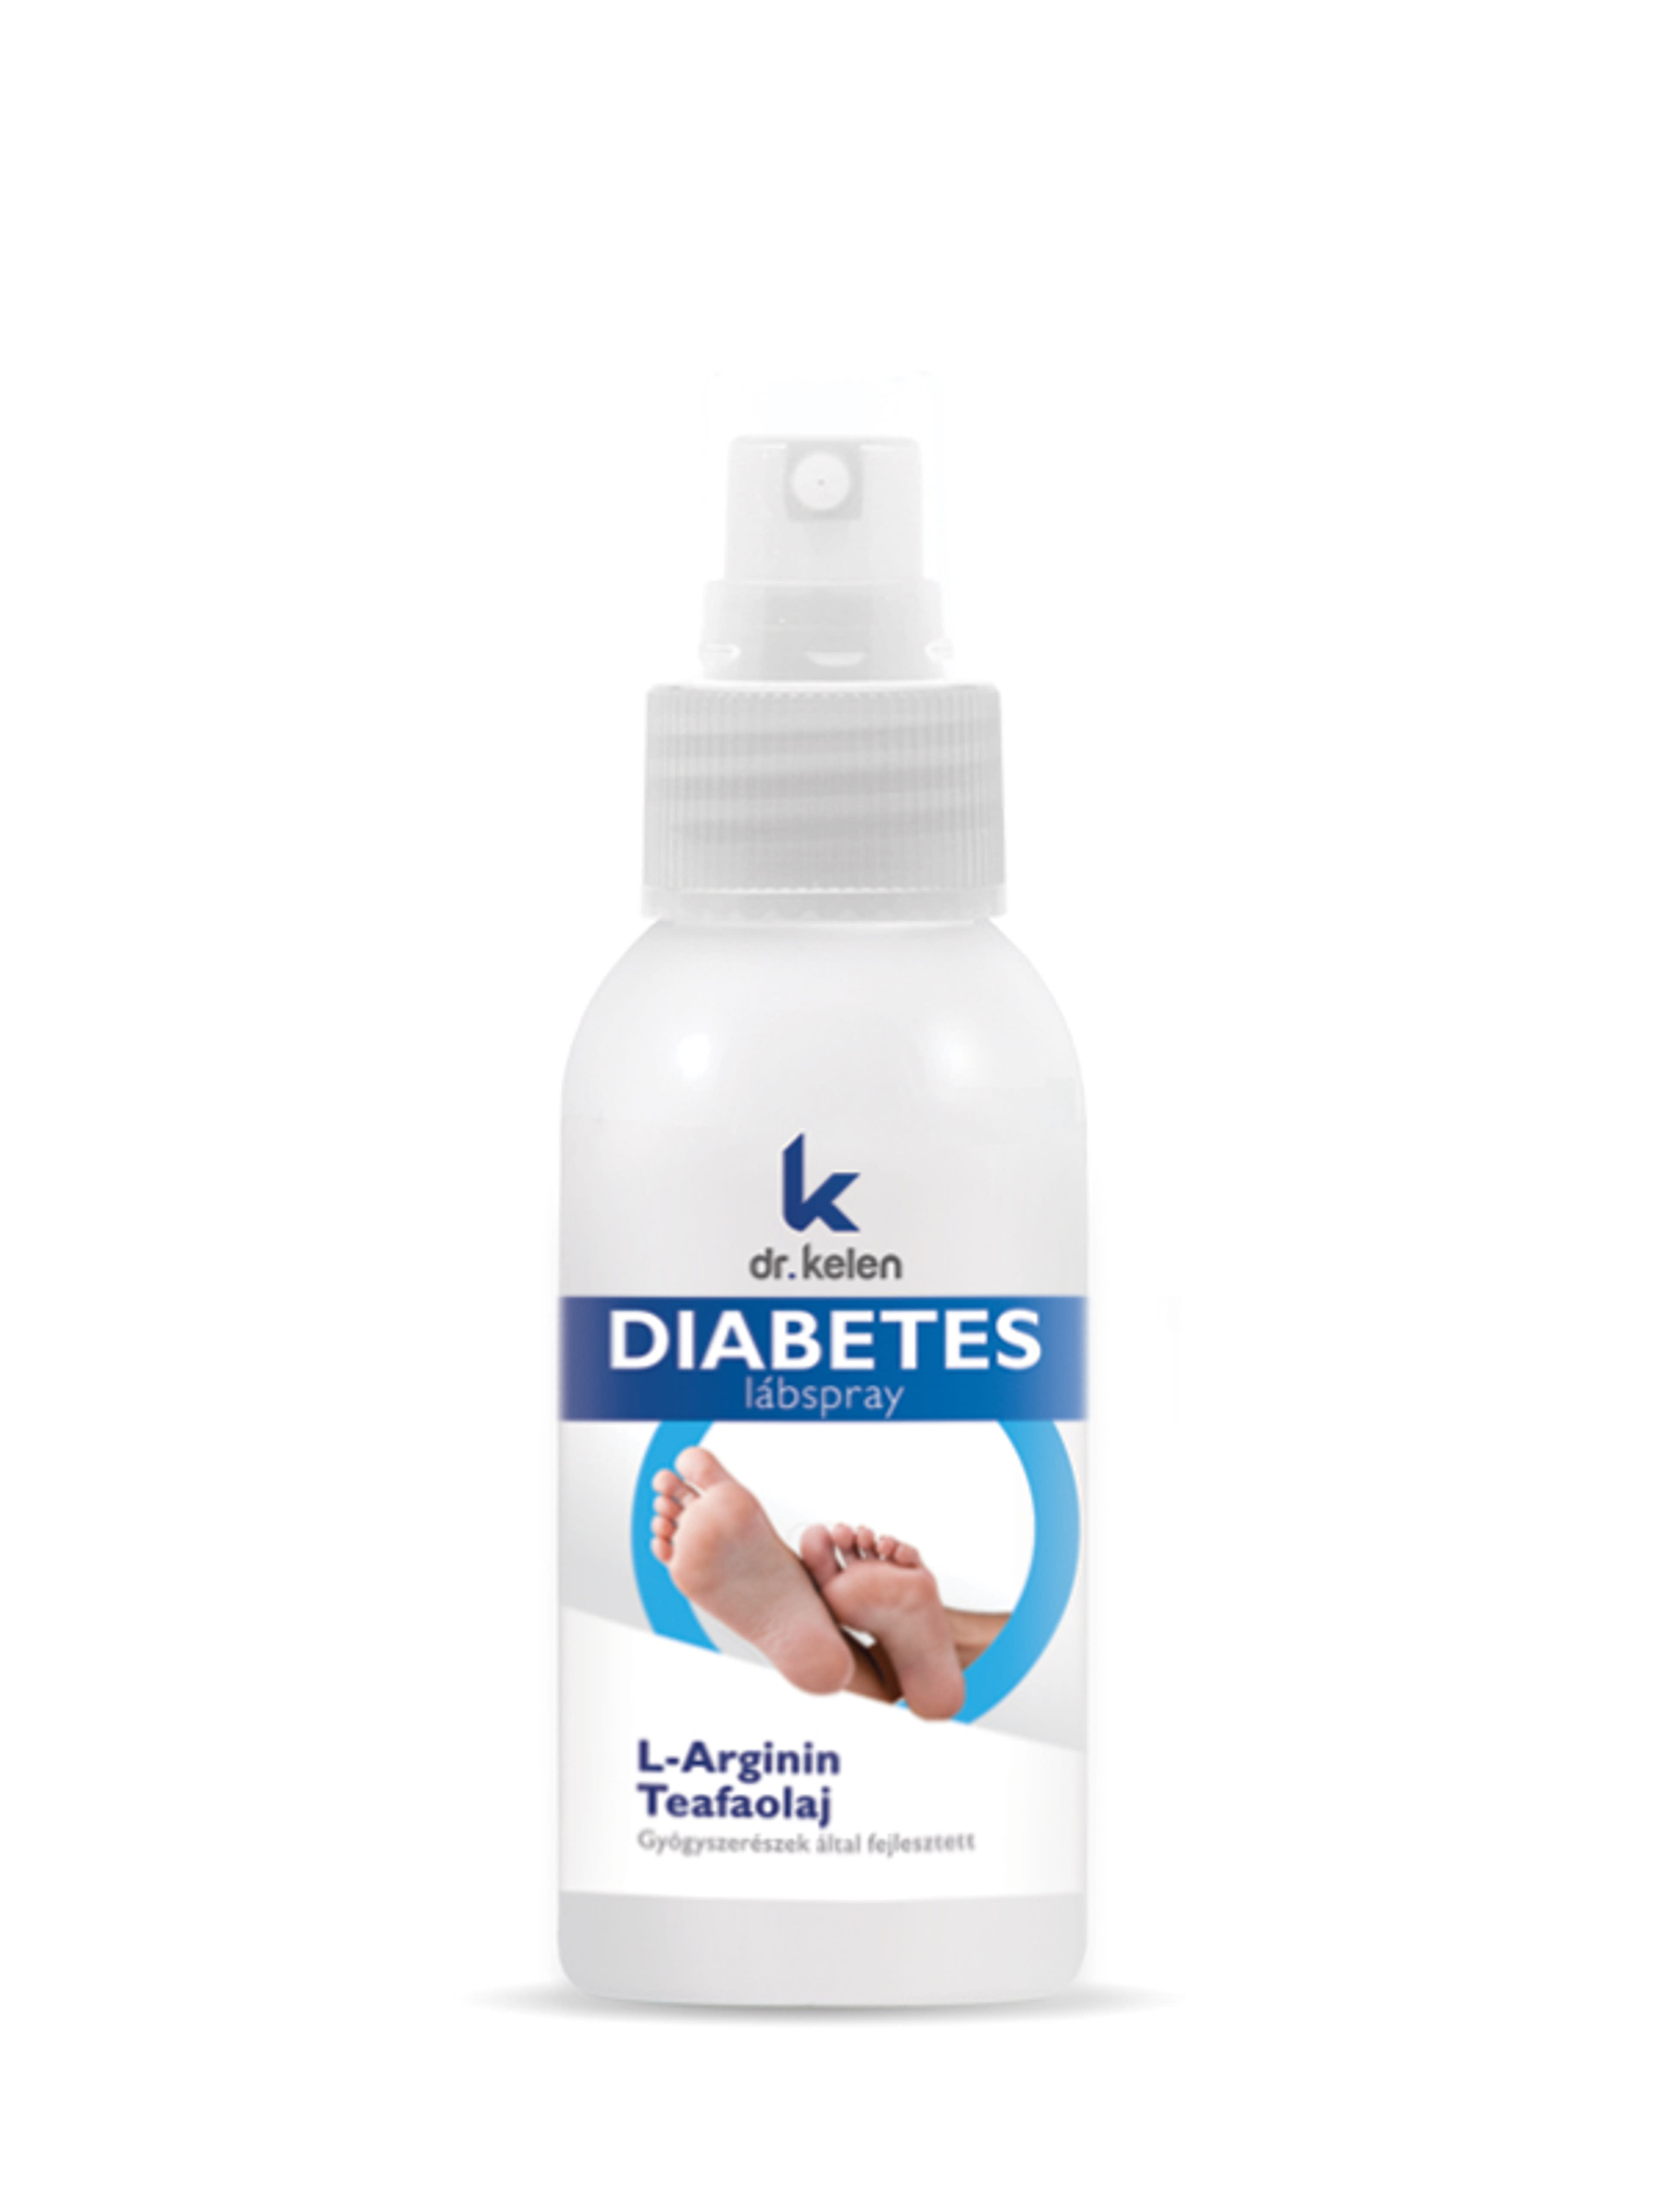 Dr. Kelen labspray diabetes - 100 ml